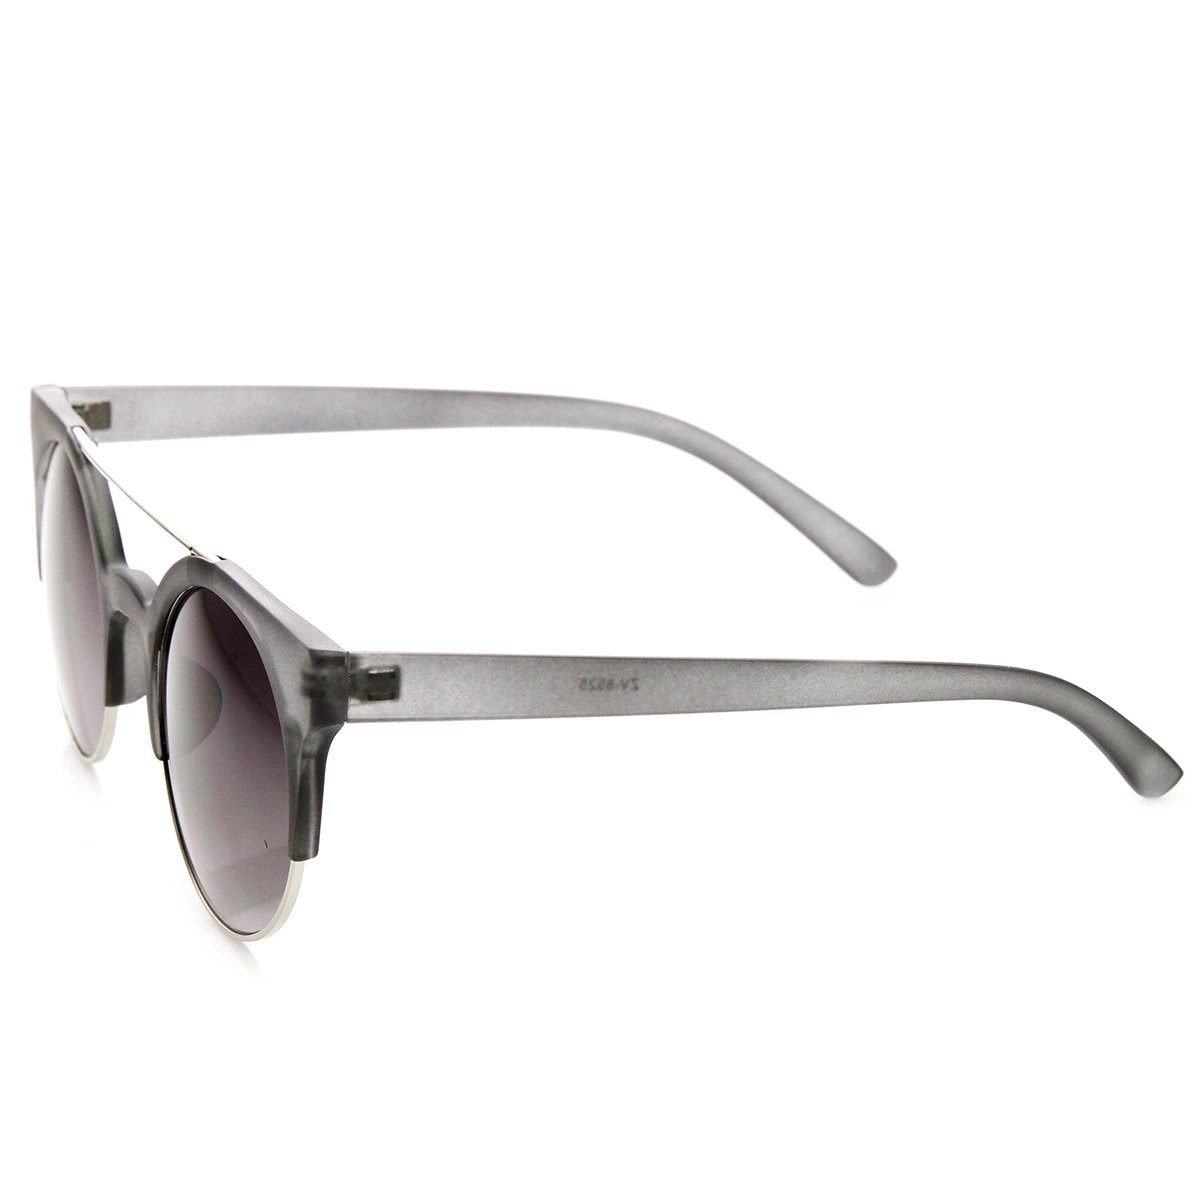 Retro Circle Round Half Frame Aviator Bar Sunglasses - Tortoise